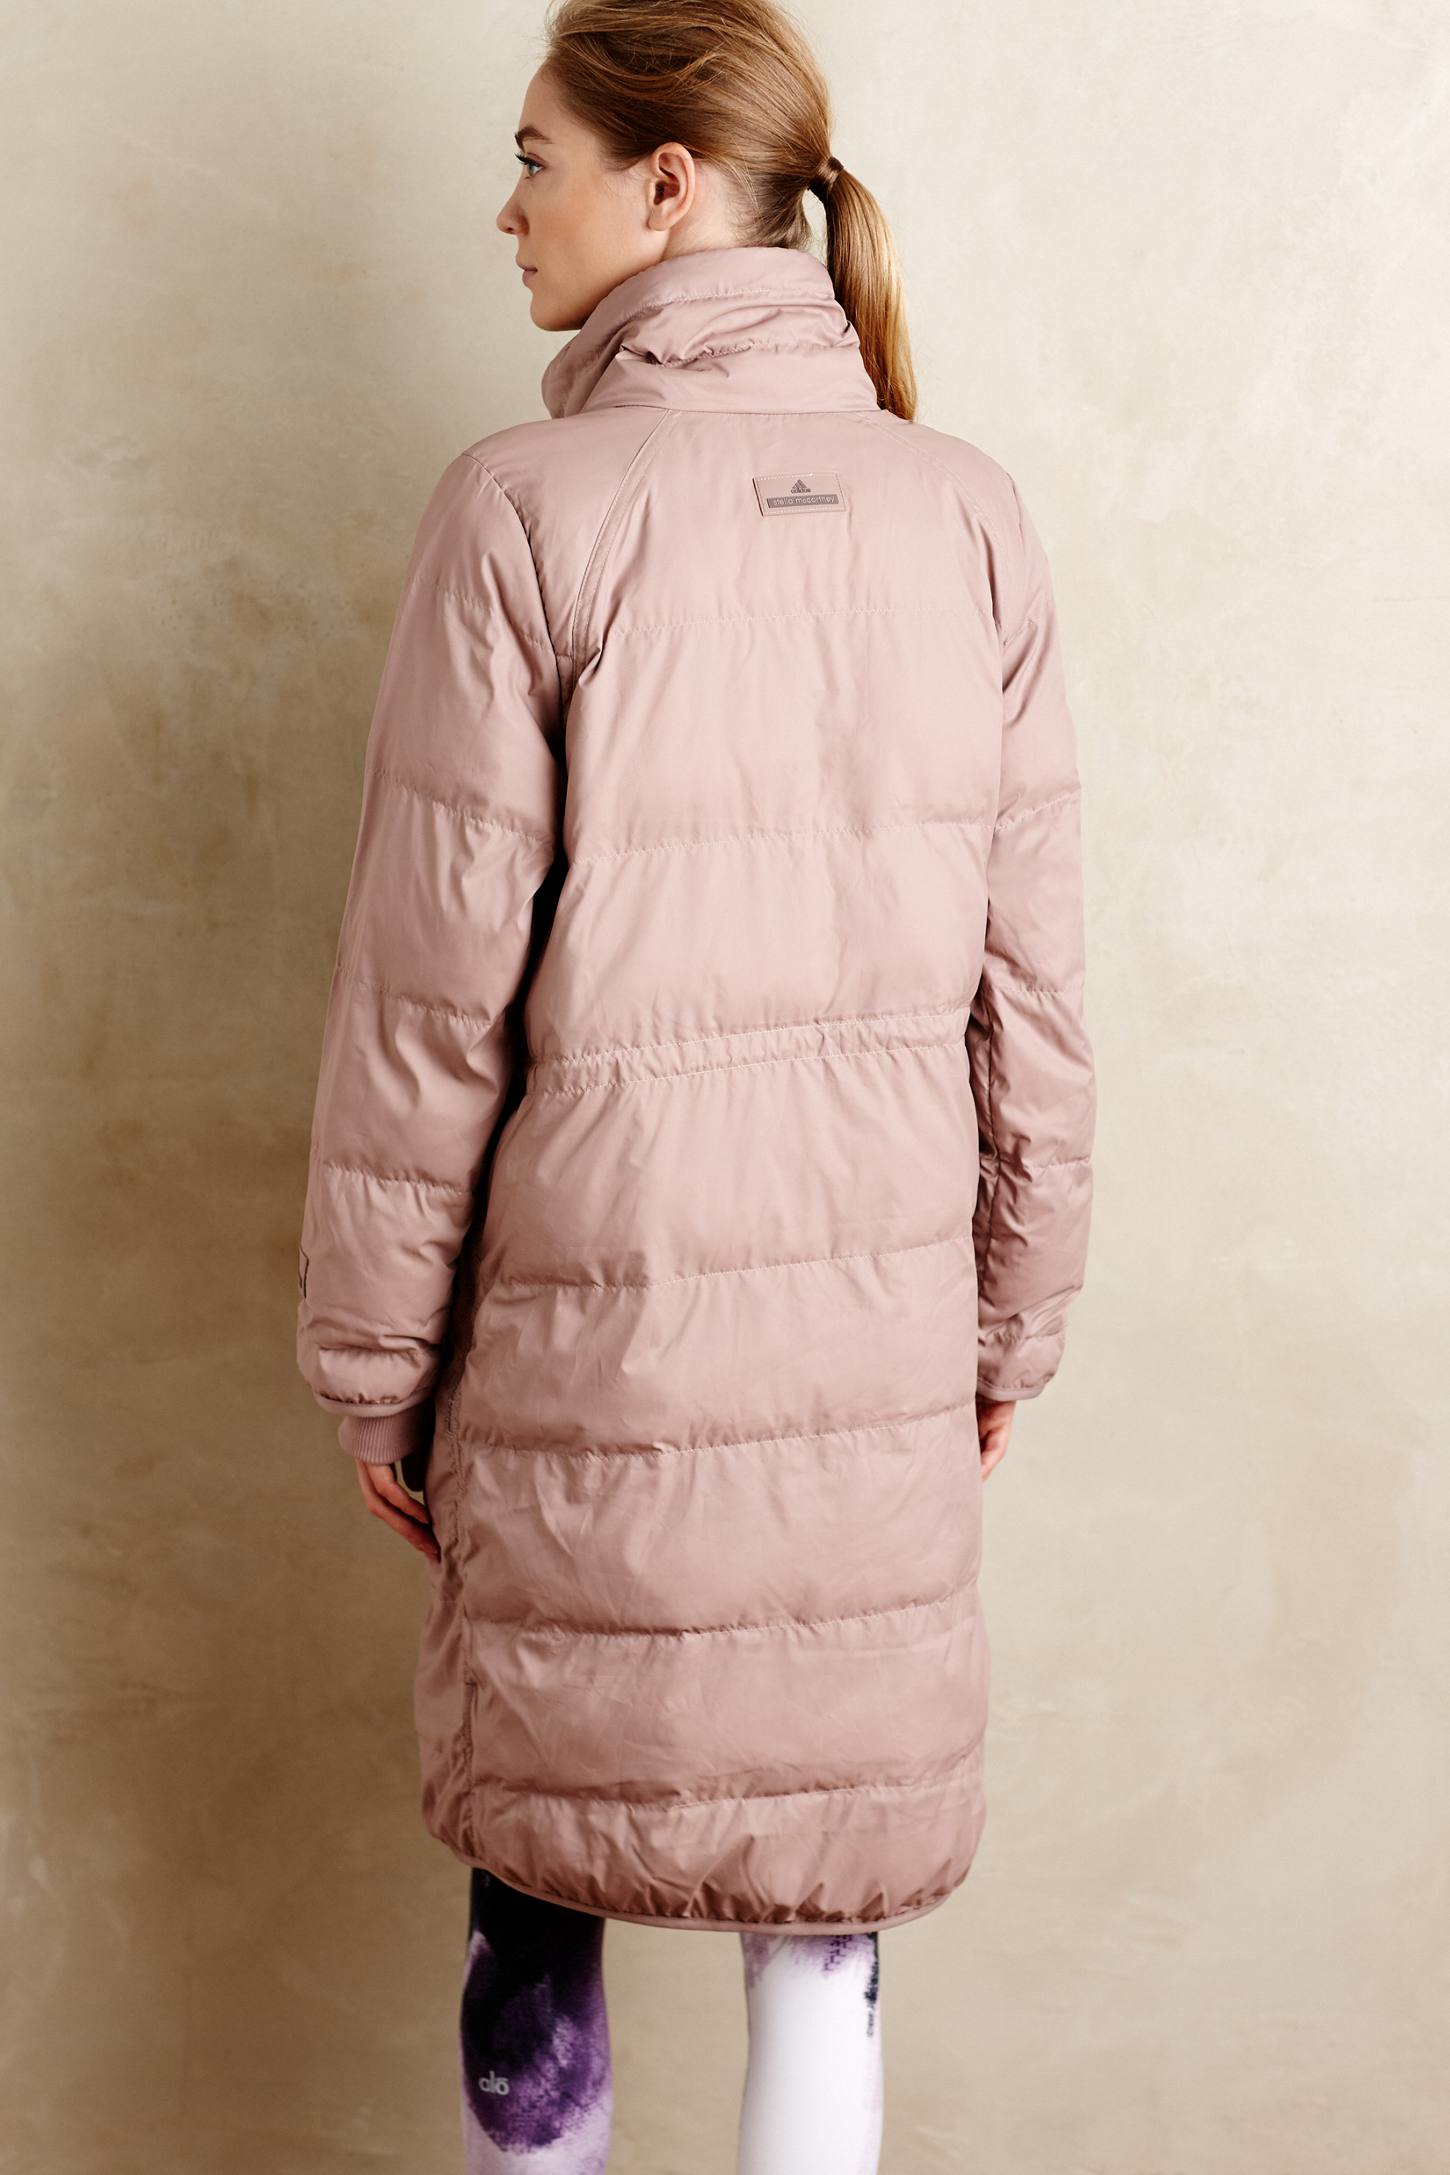 Lyst - Adidas by stella mccartney Essential Puffer Jacket in Pink